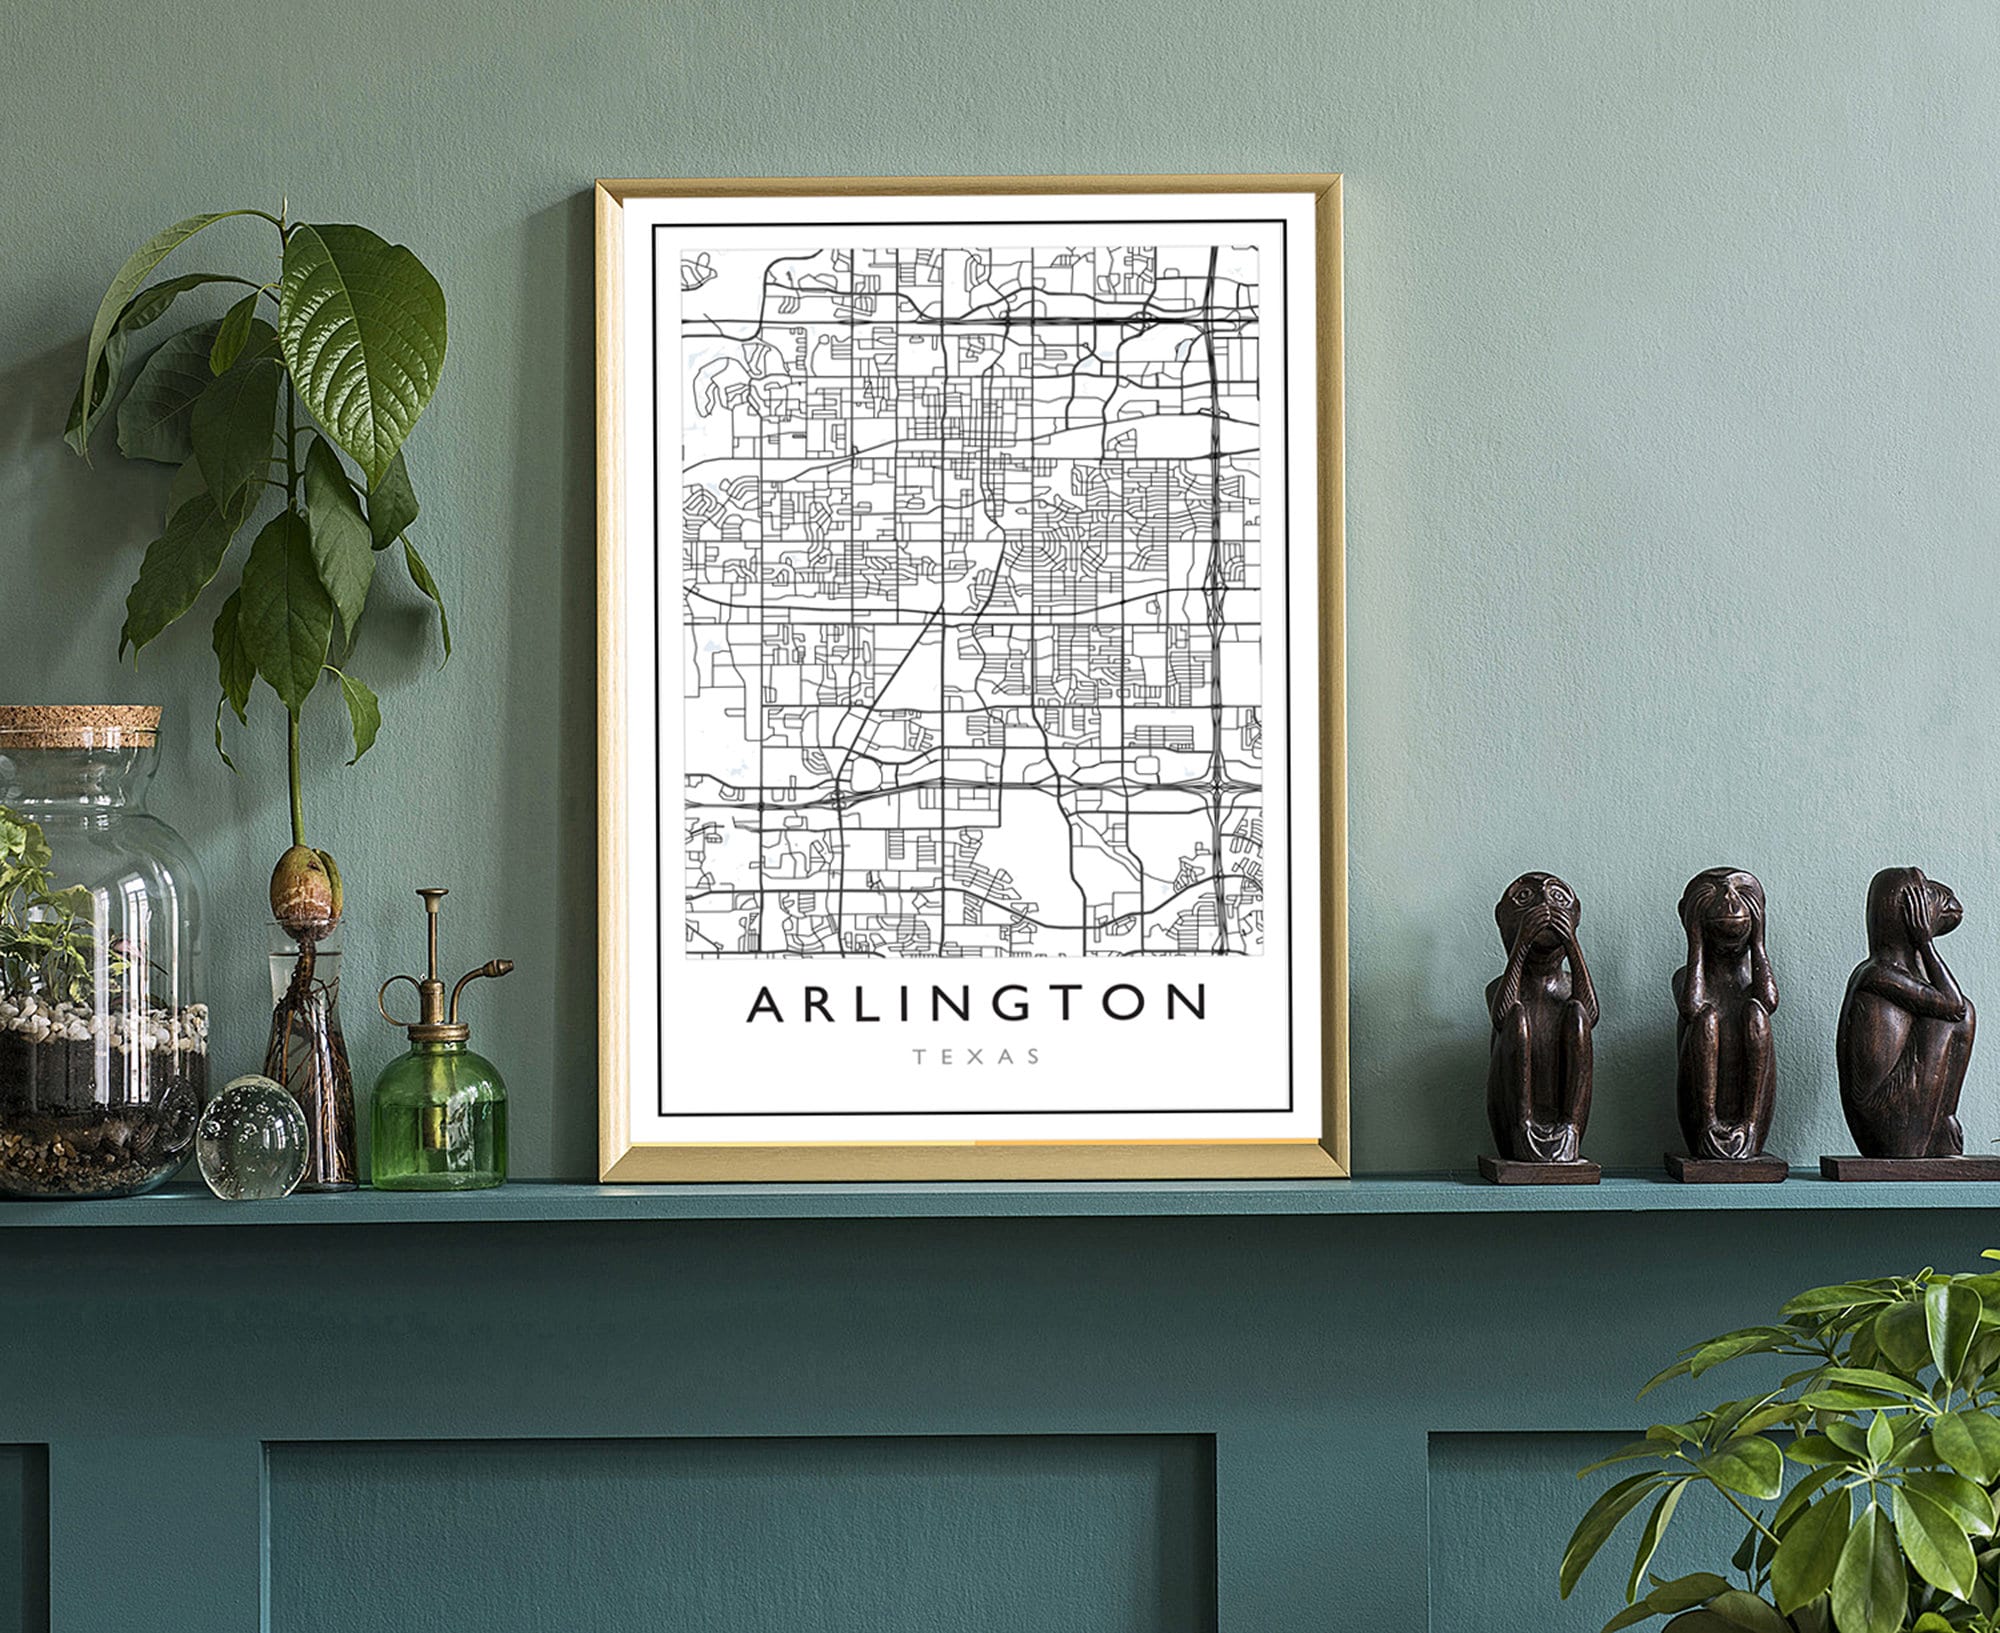 Arlington Texas City Street Map